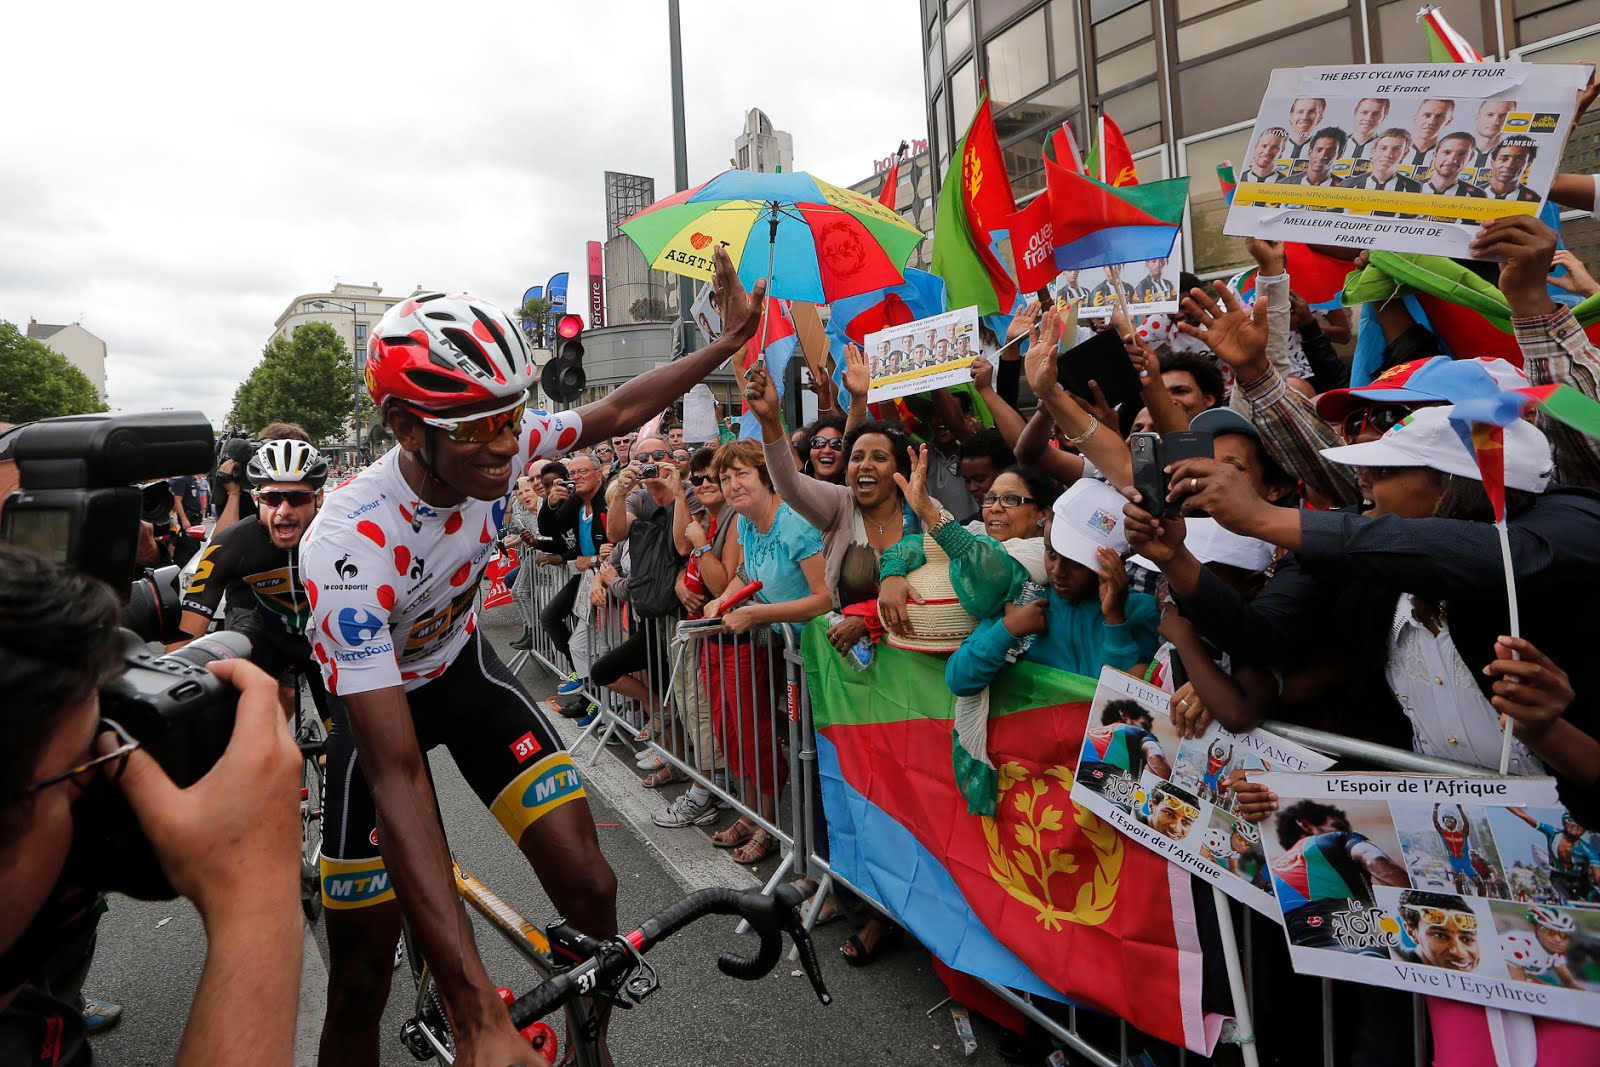 Teklehaimnot set to head African challenge at Tour de France